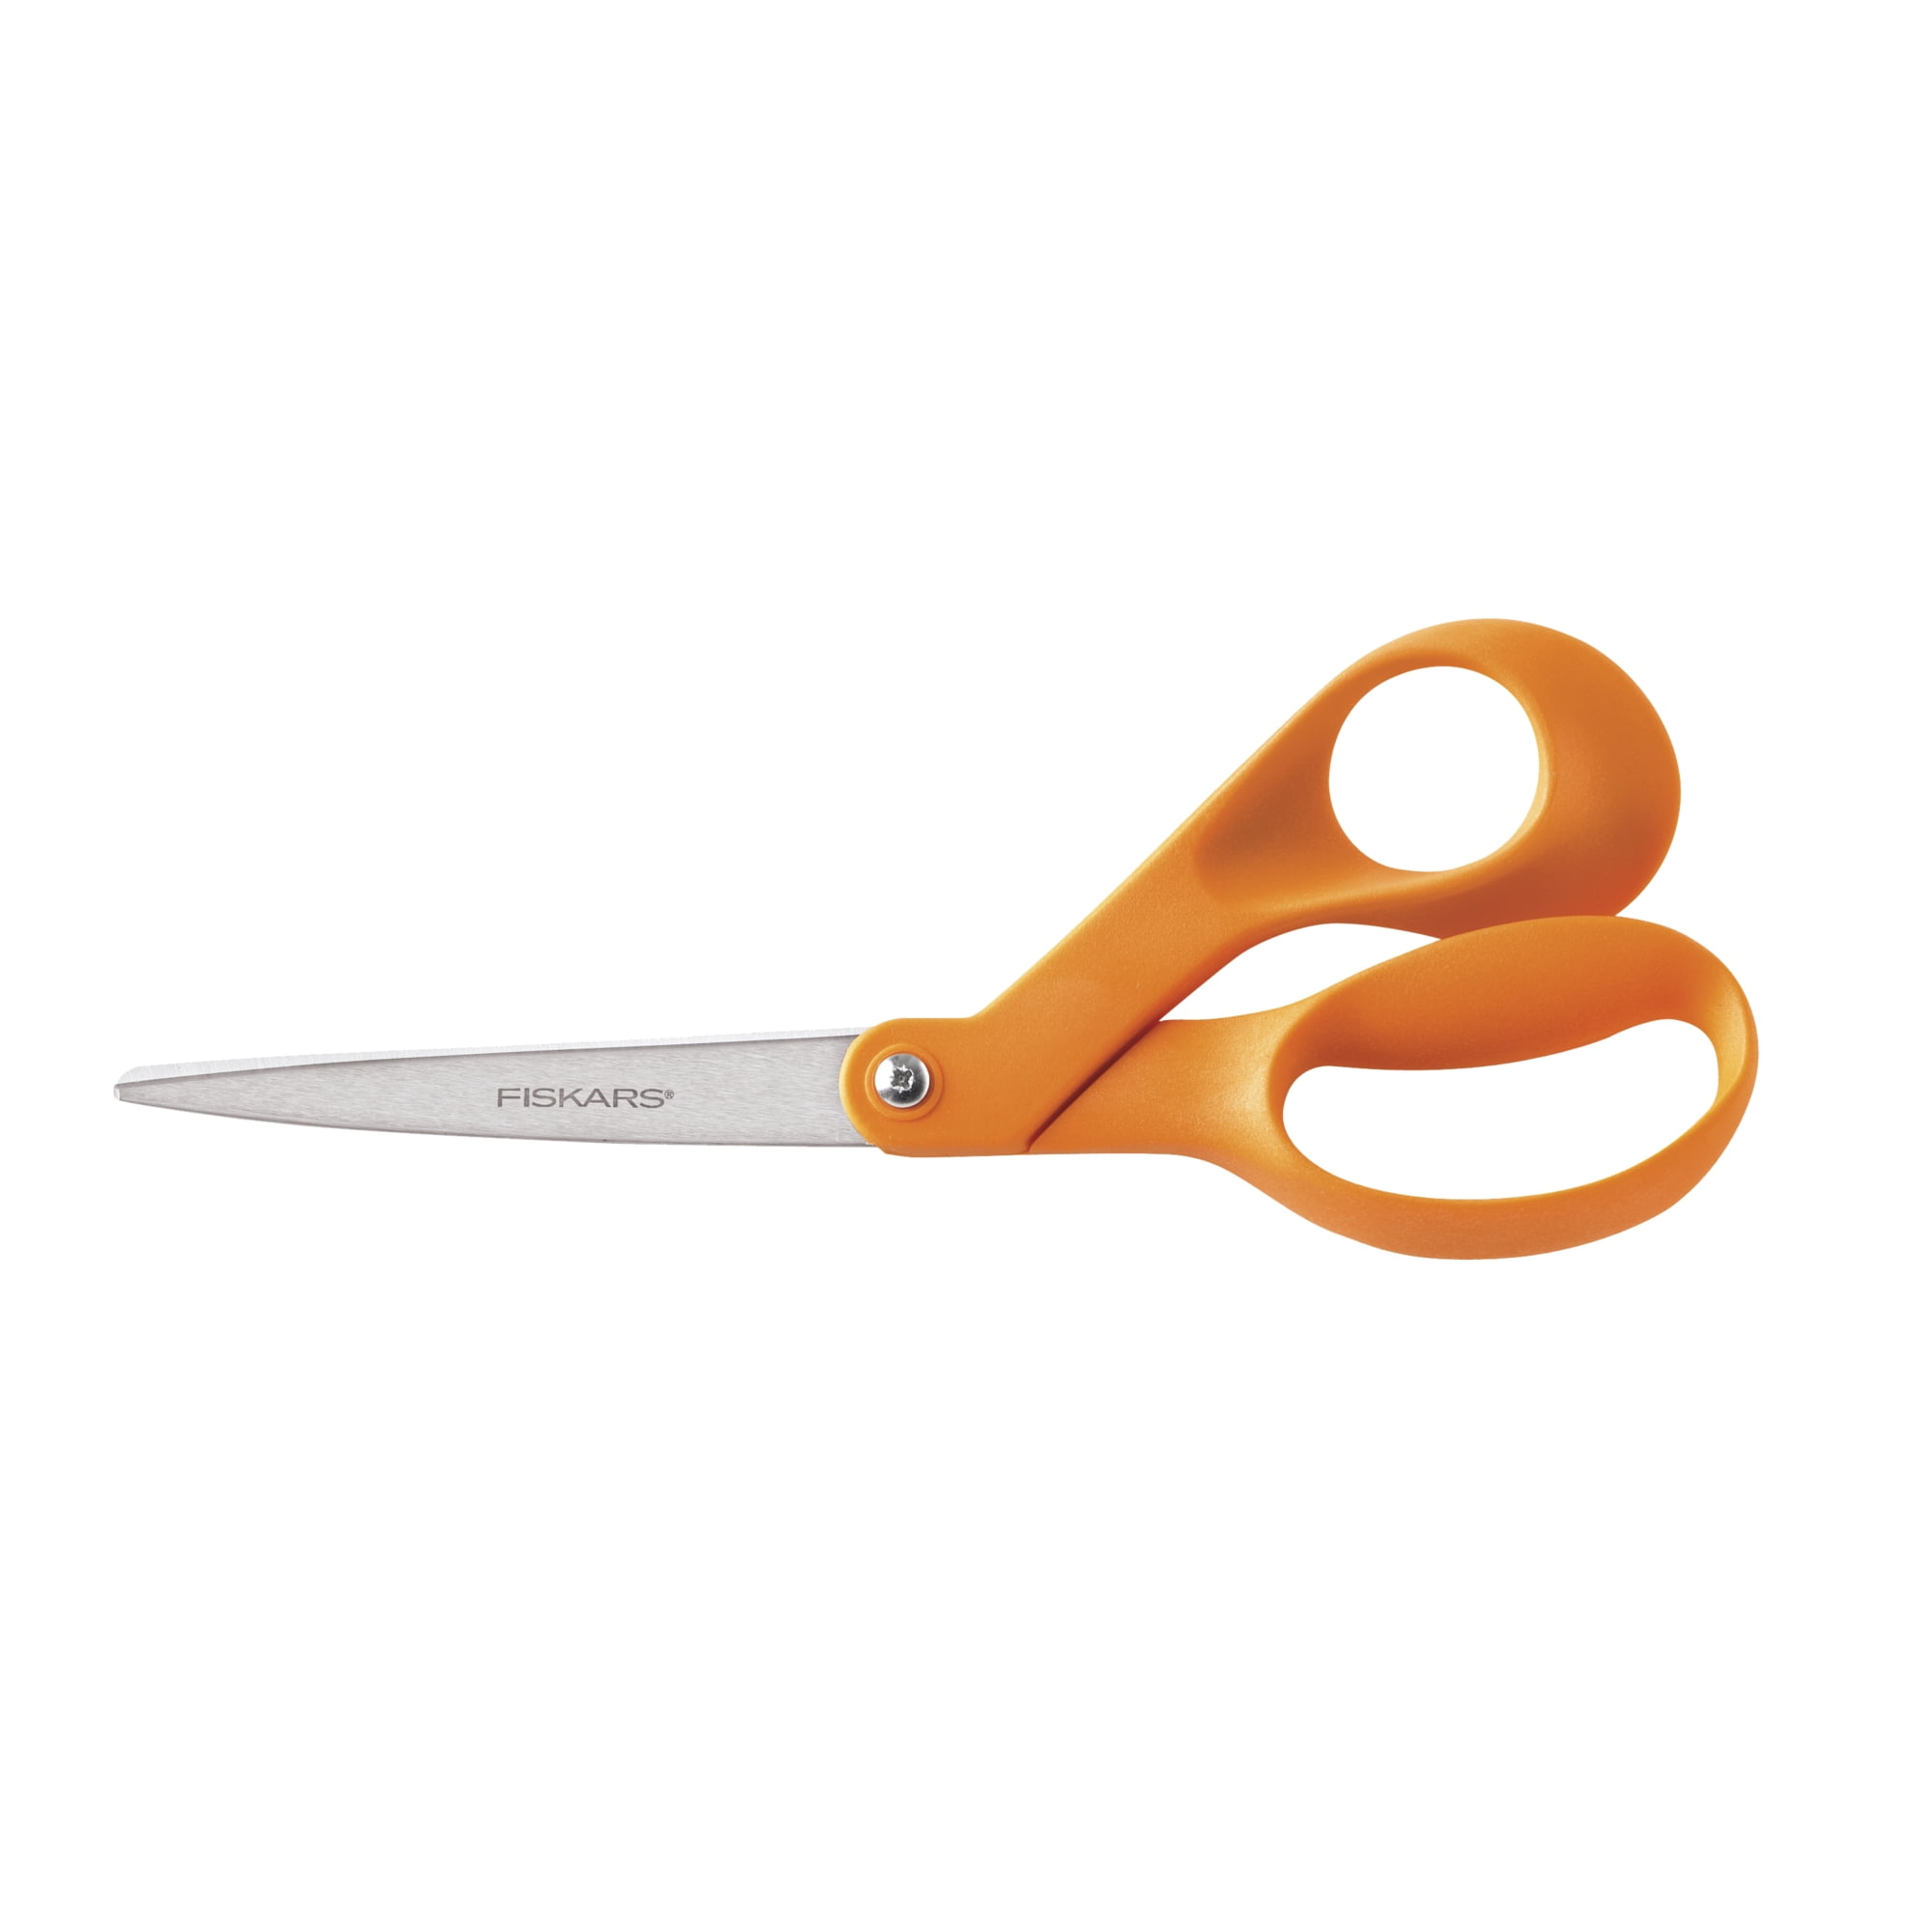 Fiskars Original Orange-handled Scissors, 8 inch